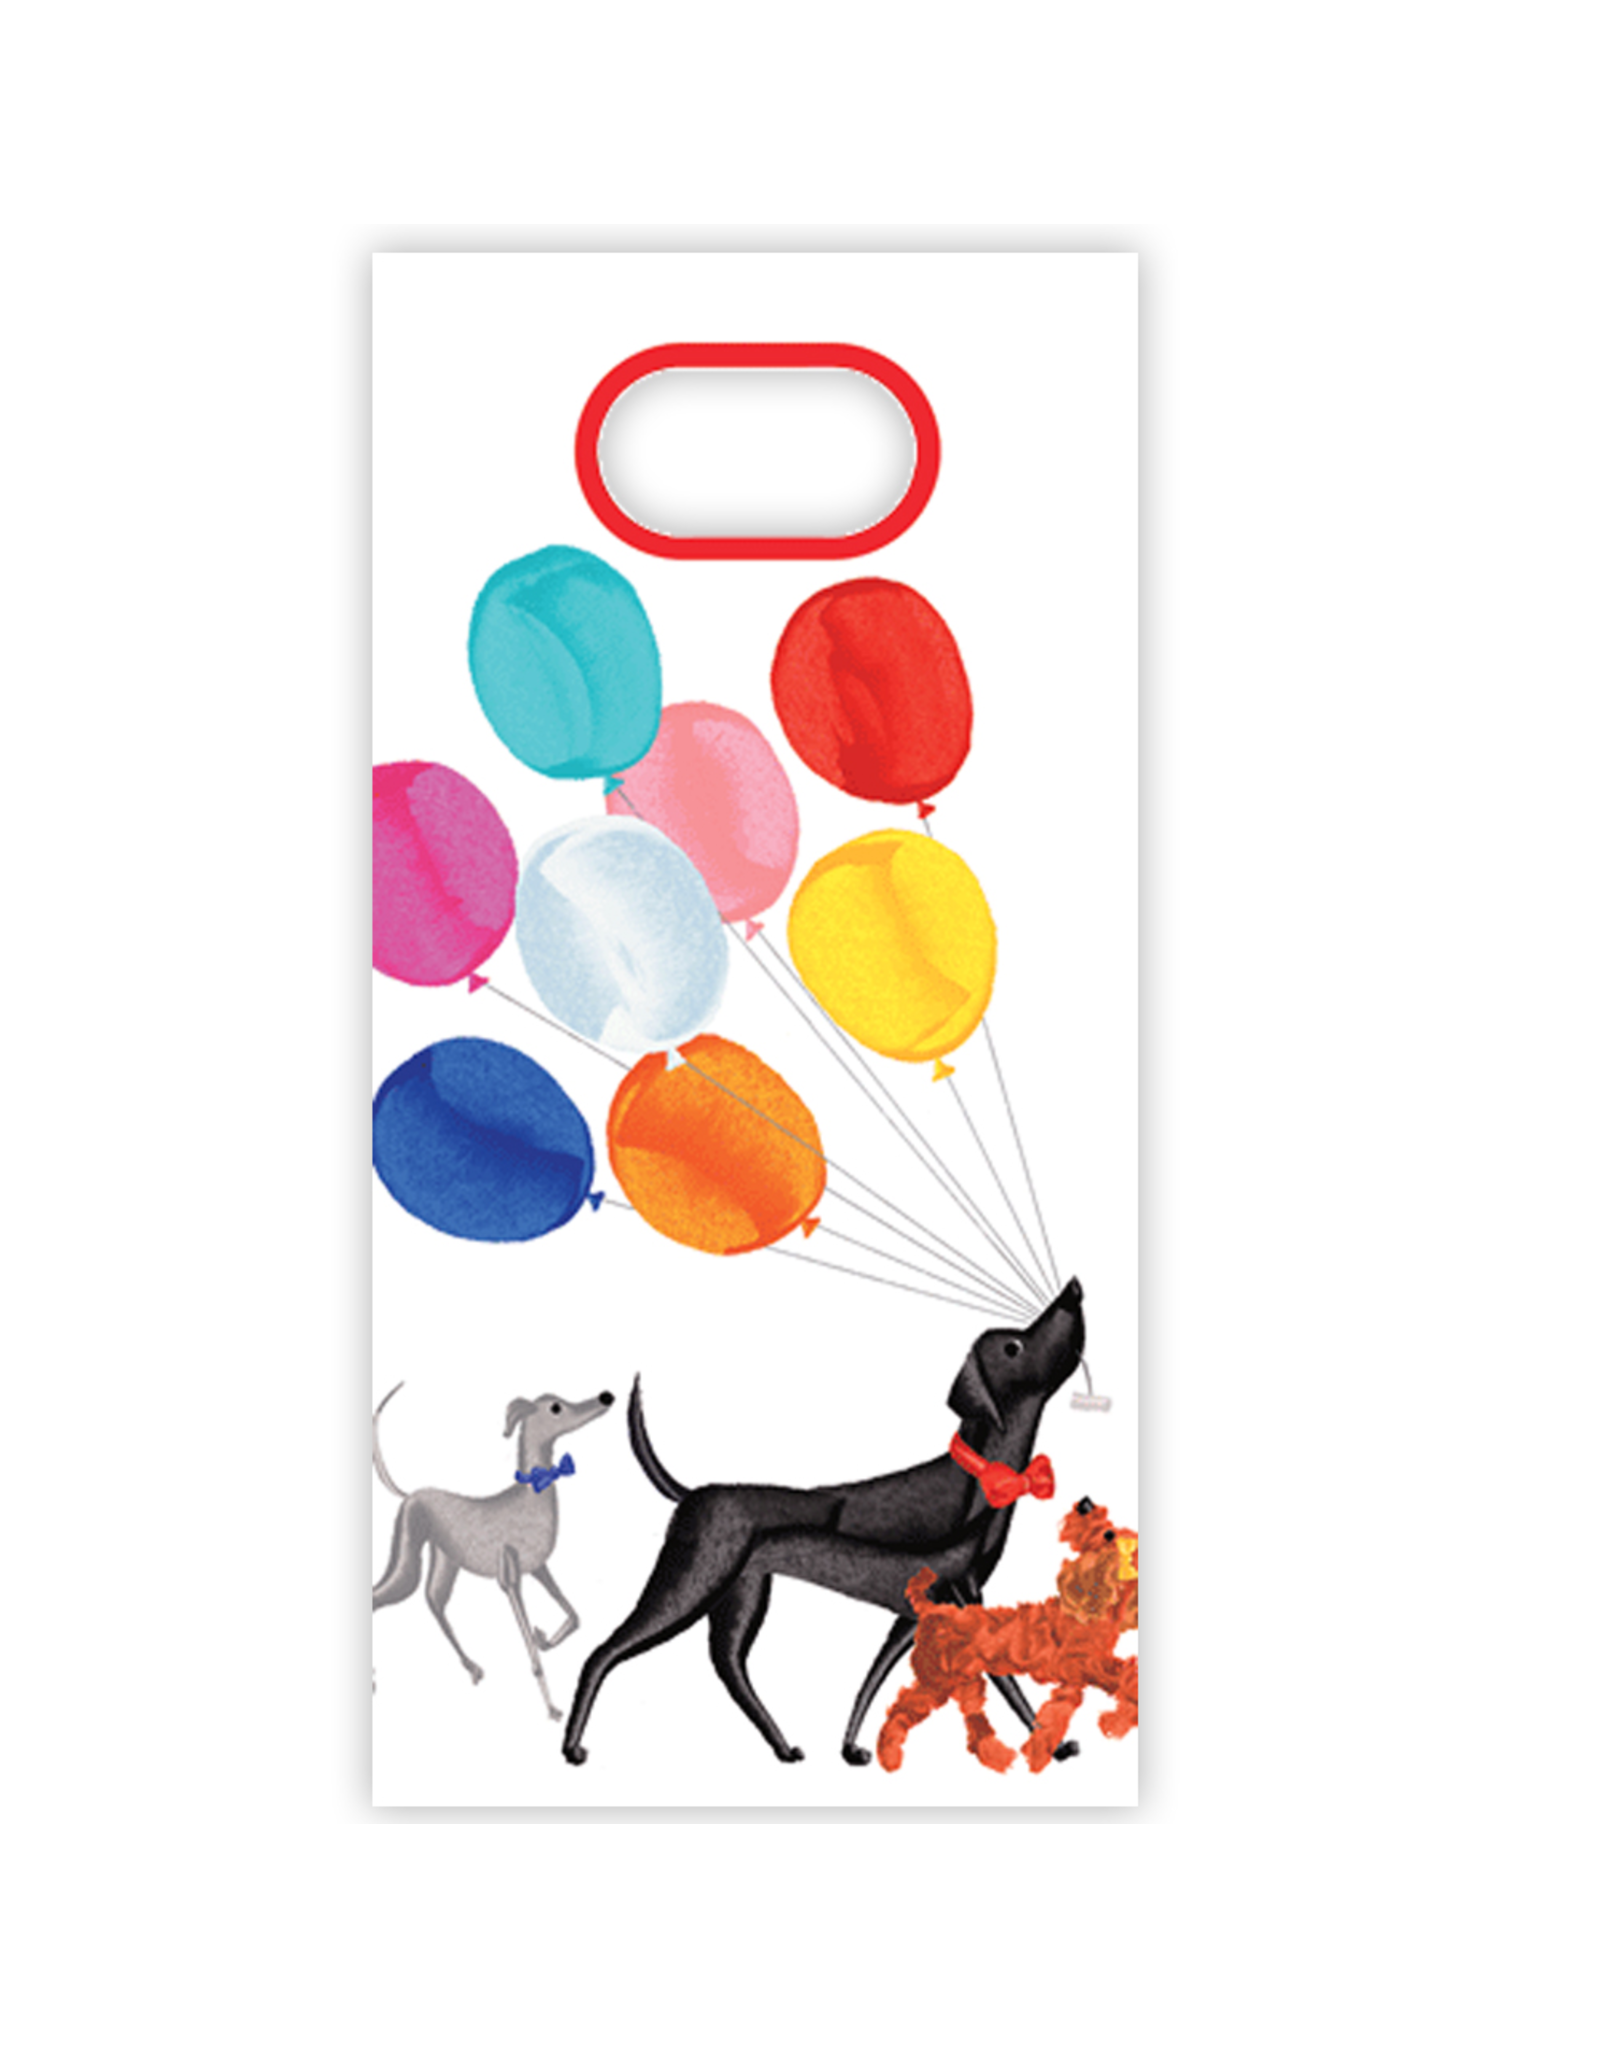 Caspari Party Favor Gift Bags 8pk Charlees Parade Dog Favor Bags